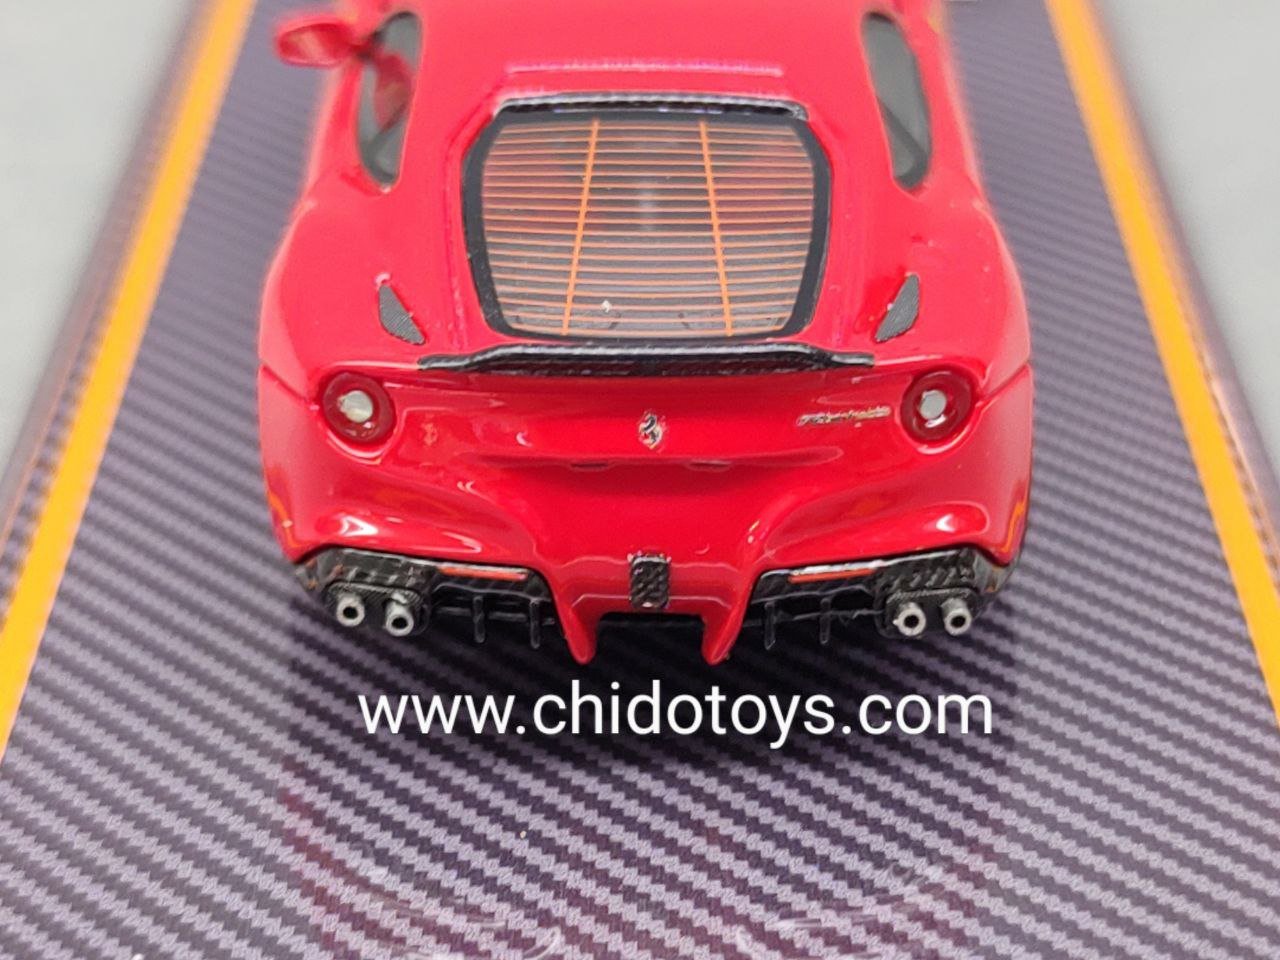 Auto a escala marca U2 modelo Ferrari DMC F12. - Chido Toys